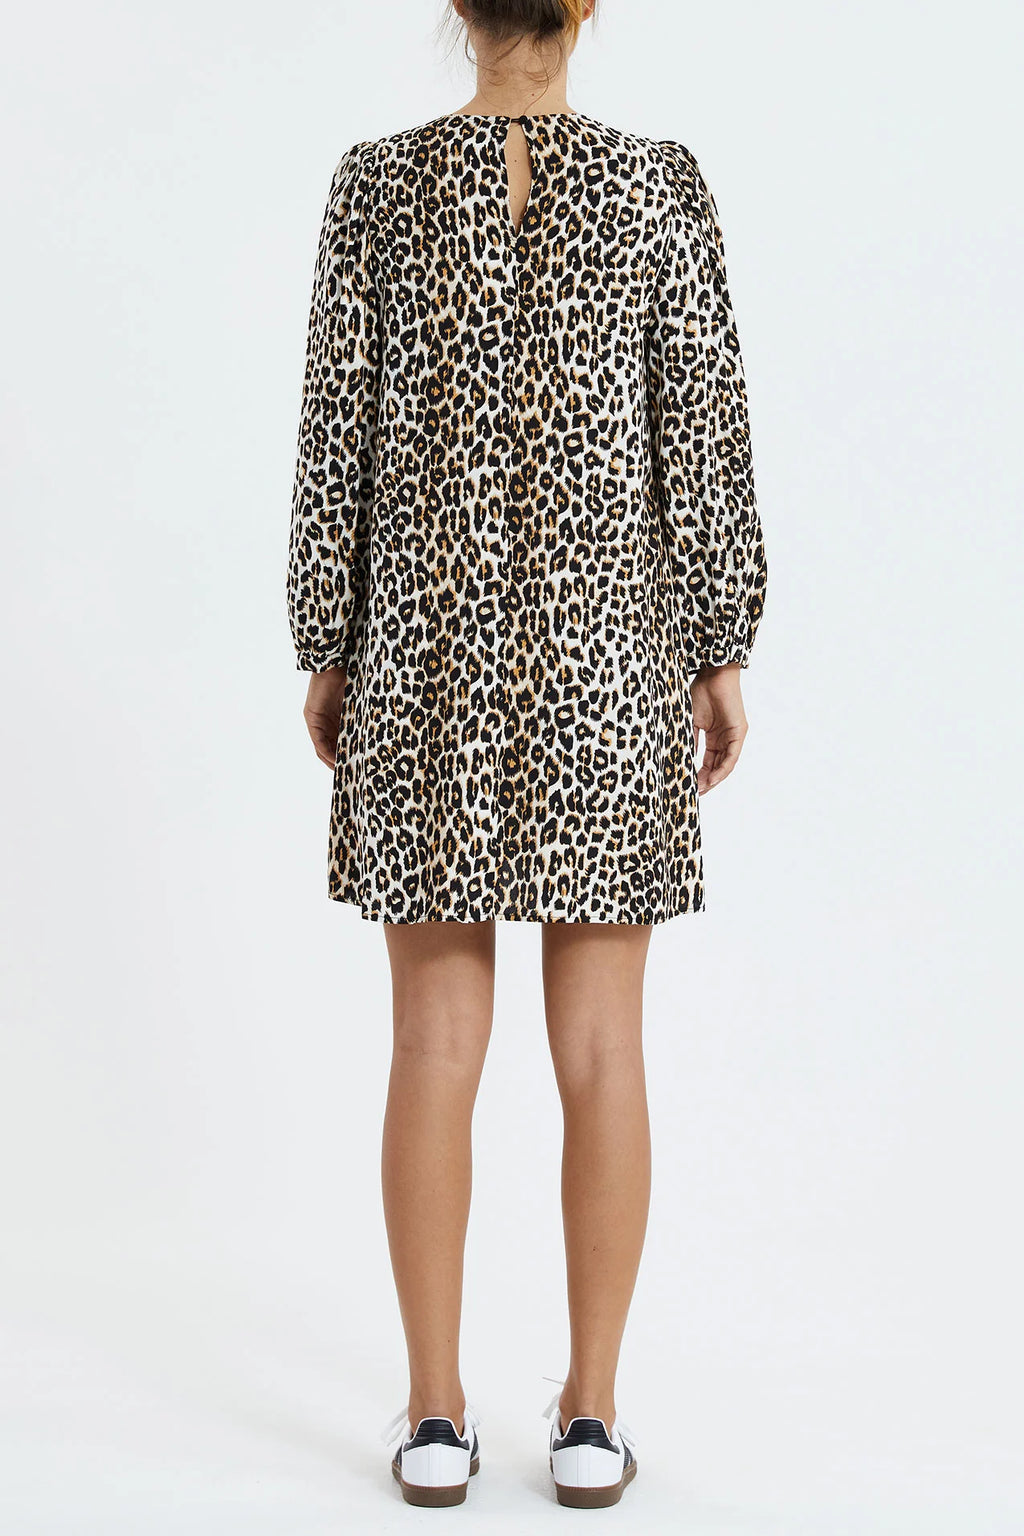 Lolly's Laundry - Carla Dress (Leopard Print)